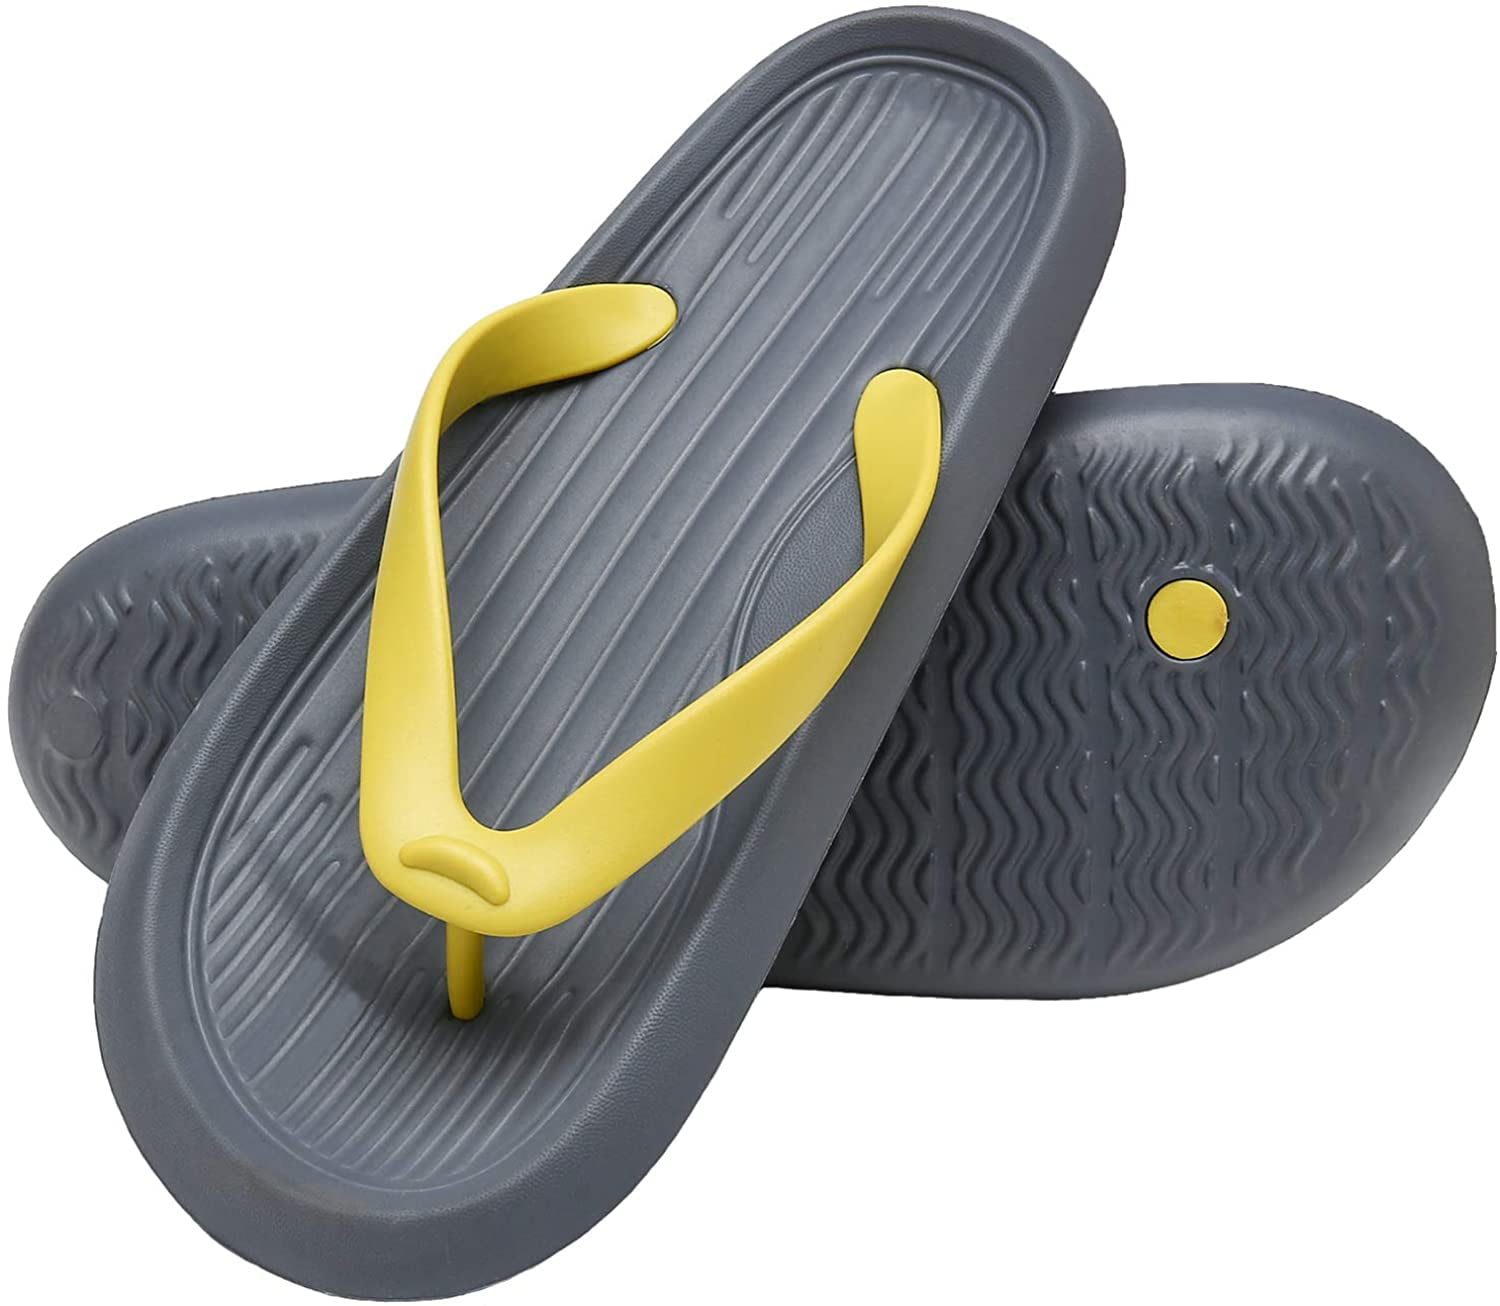 Men's Thong Sandals Flip Flops Beach Shoes Synthetic Rubber Sole Lightweight 